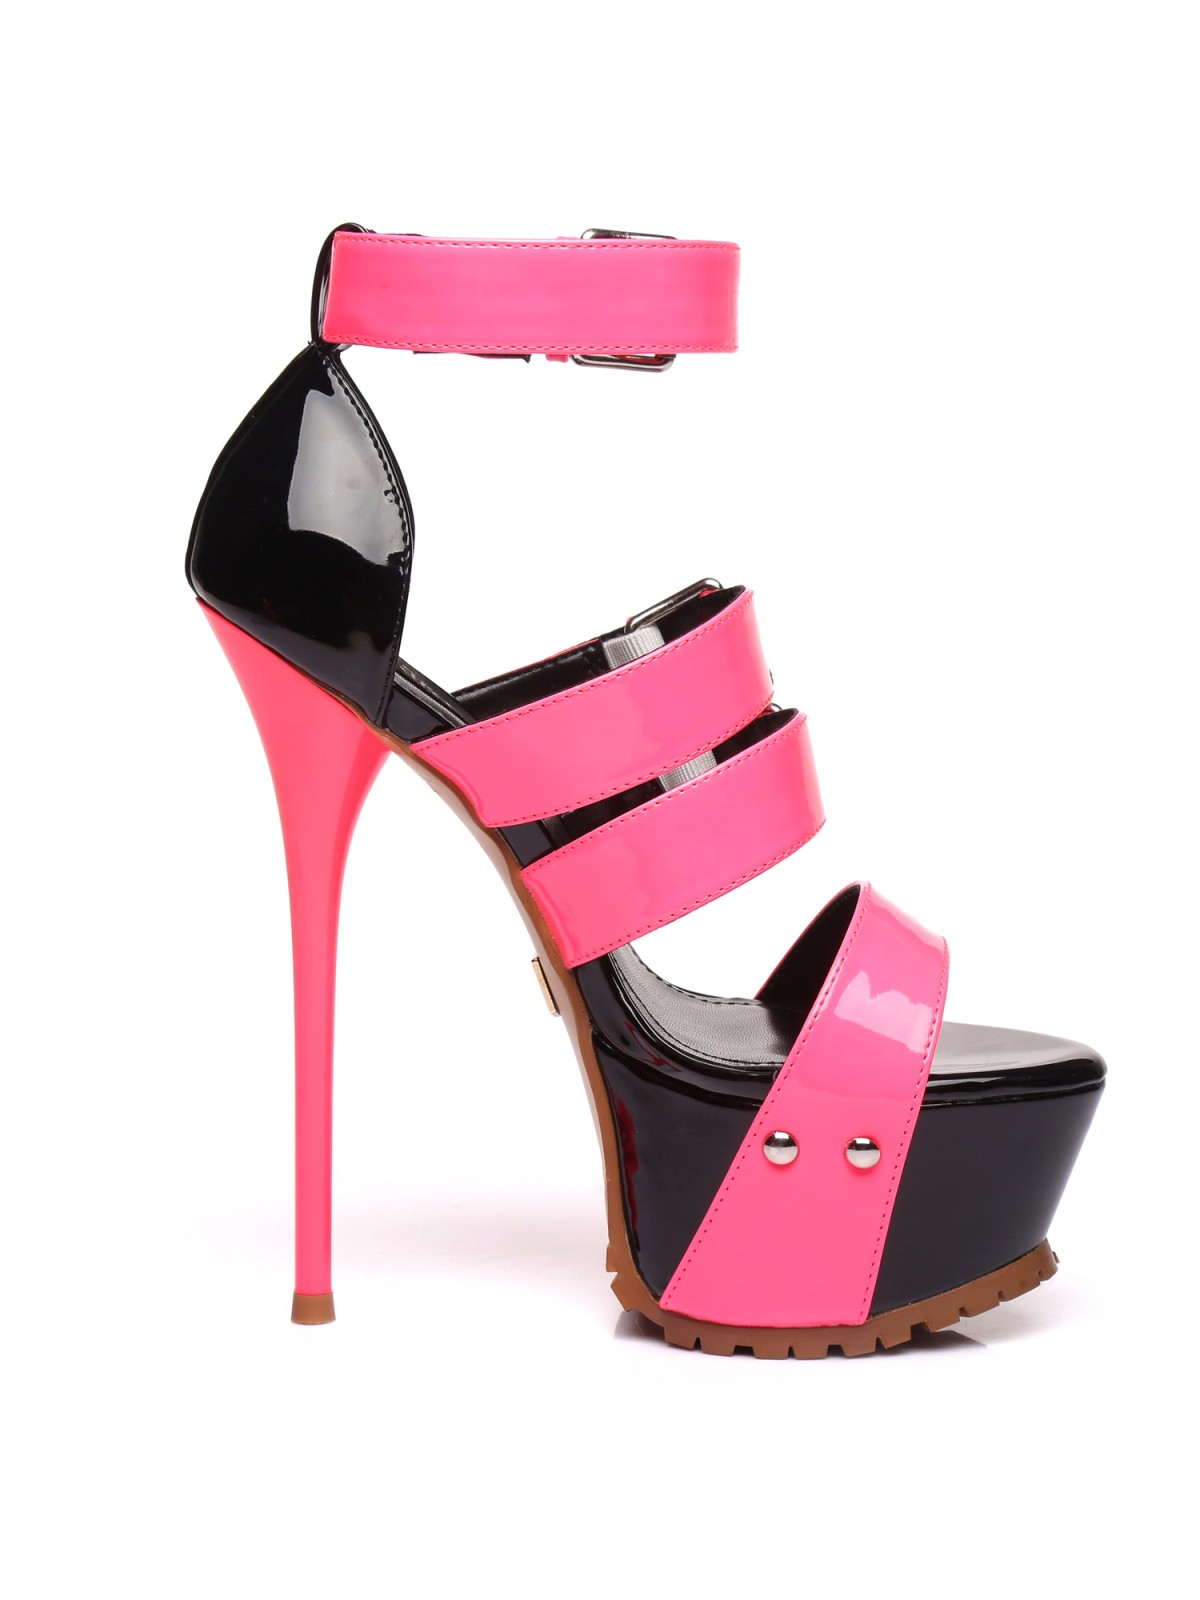 Giaro SIENNA black with pink shiny straps sandals platform